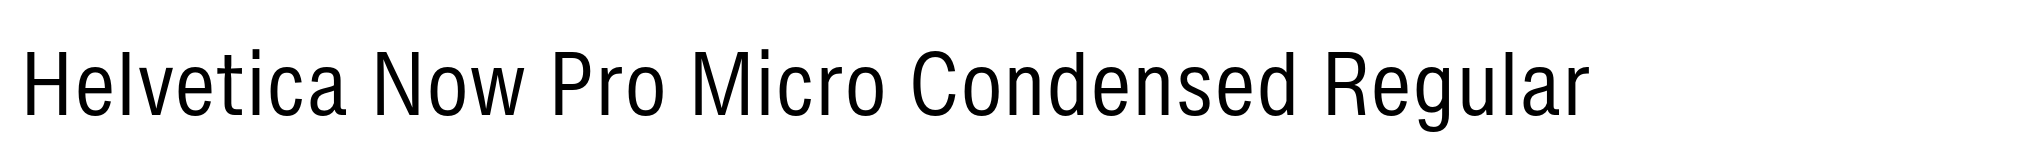 Helvetica Now Pro Micro Condensed Regular image